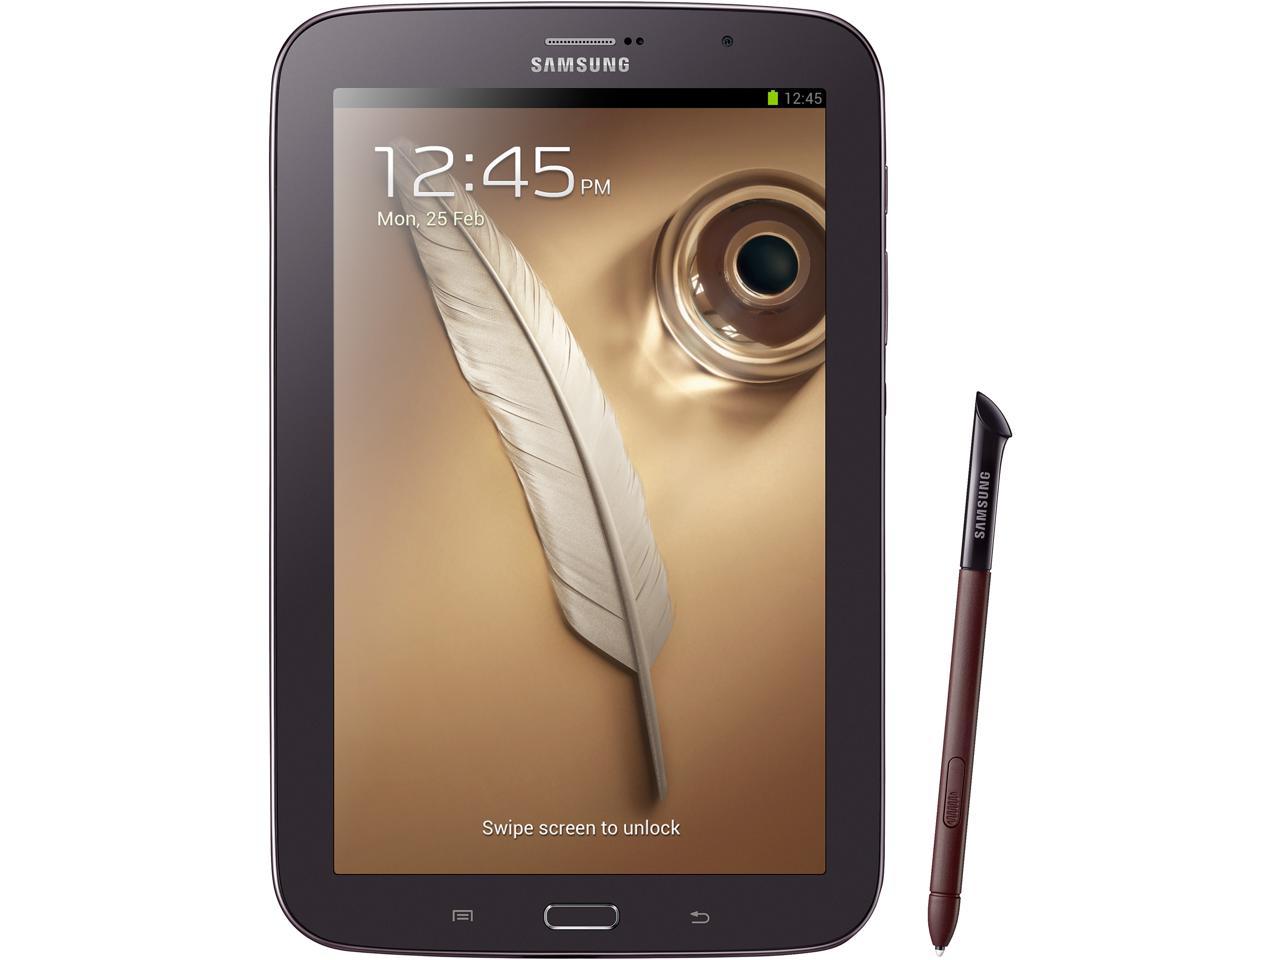 Samsung GTN5110ZWYXAR Galaxy Note (16Gb) 8-Inch Android Tablet